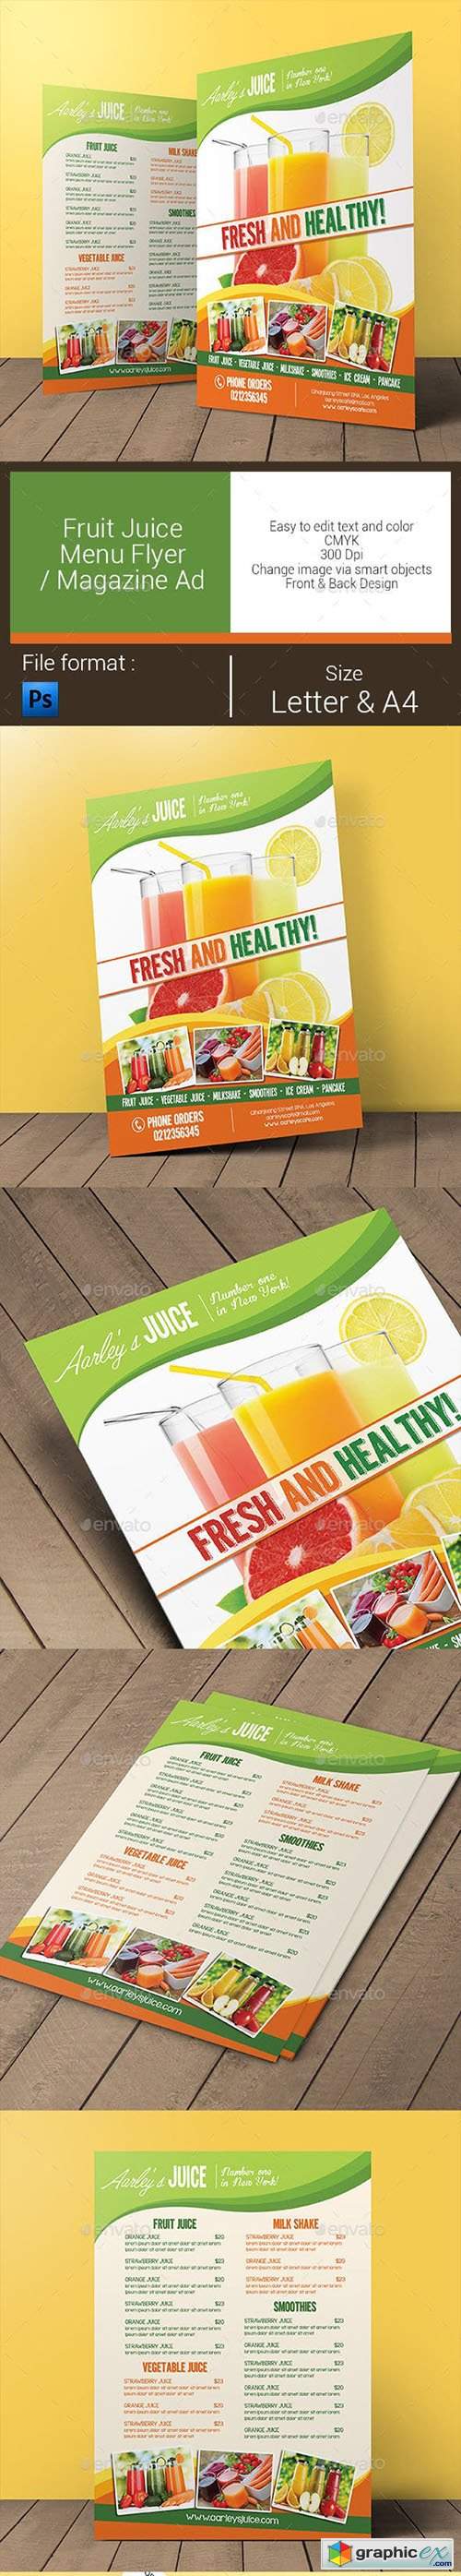 Fruit Juice Menu Flyer / Magazine Ad